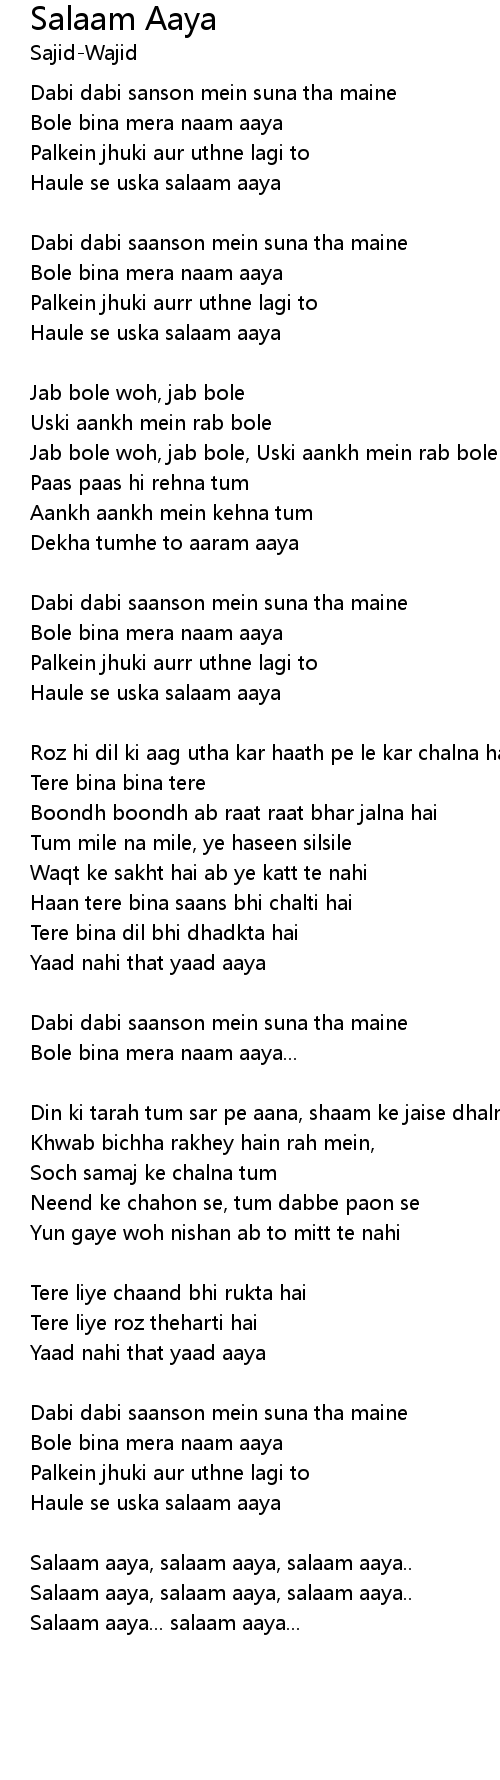 Salaam Aaya Lyrics - Follow Lyrics